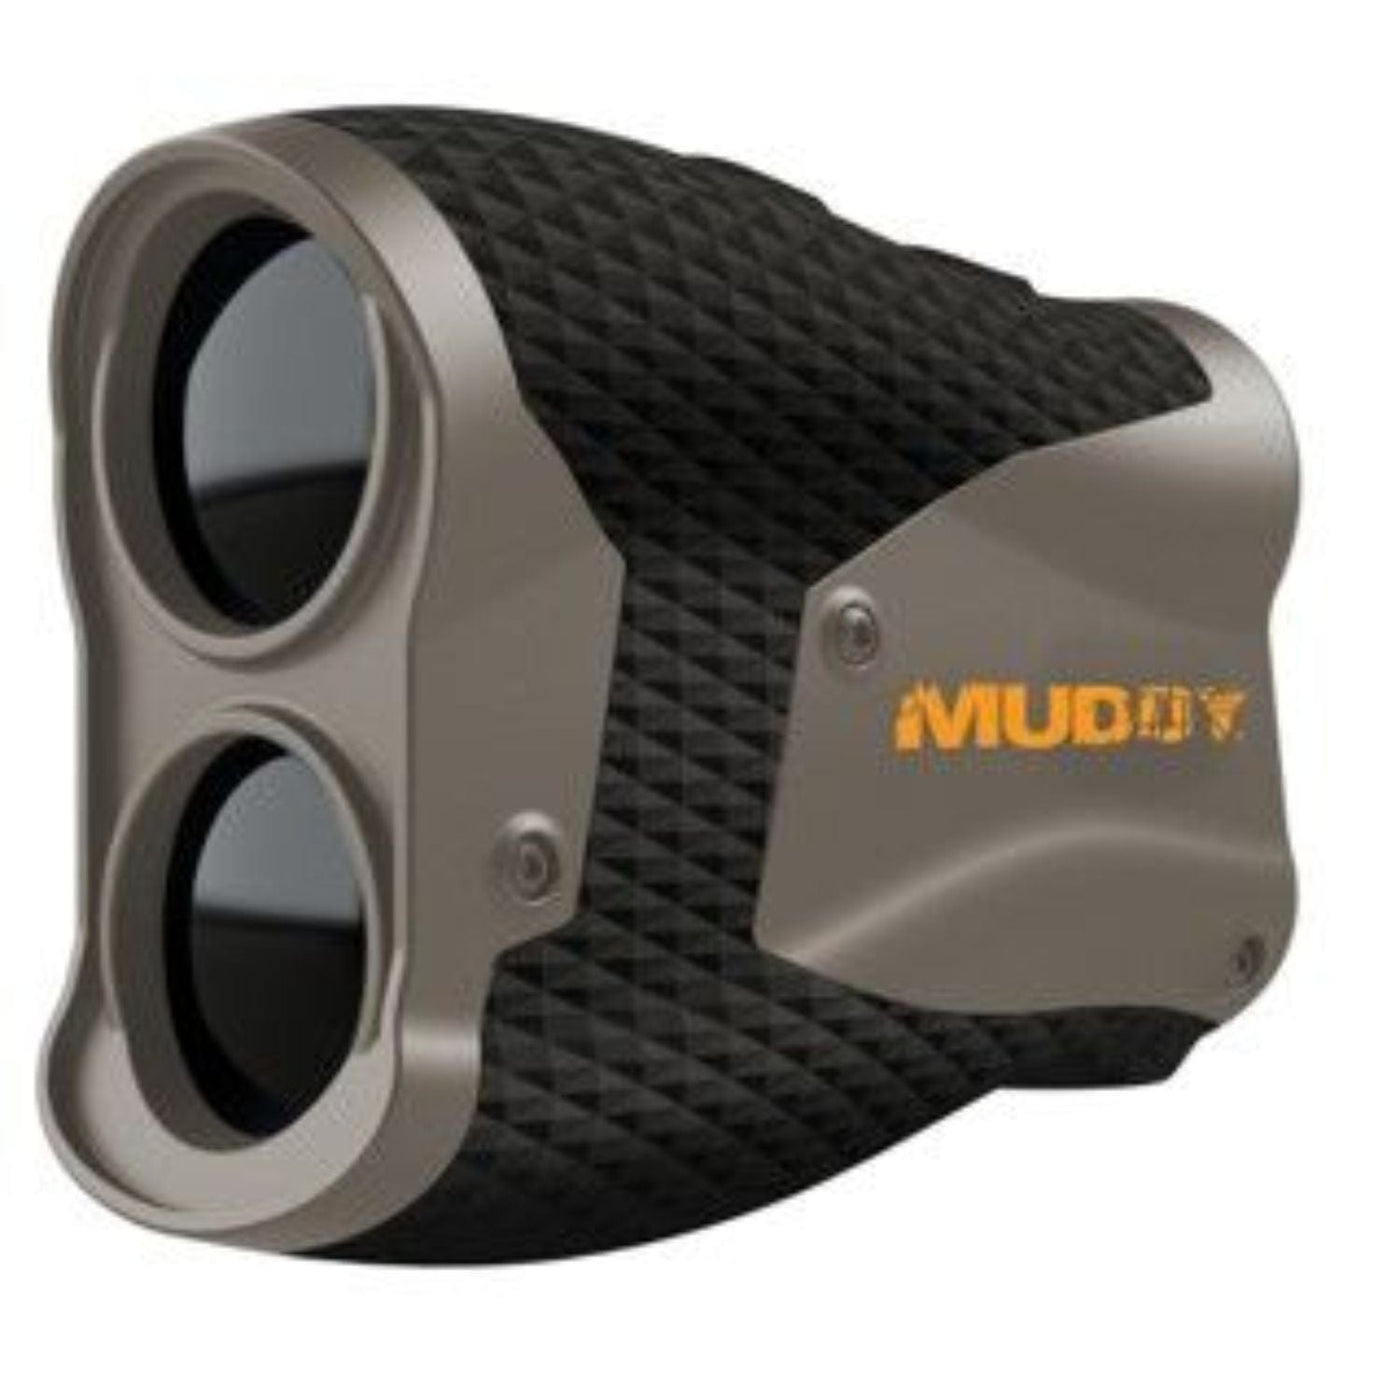 Muddy Muddy Laser Range Finder 450 Yards Optics And Sights